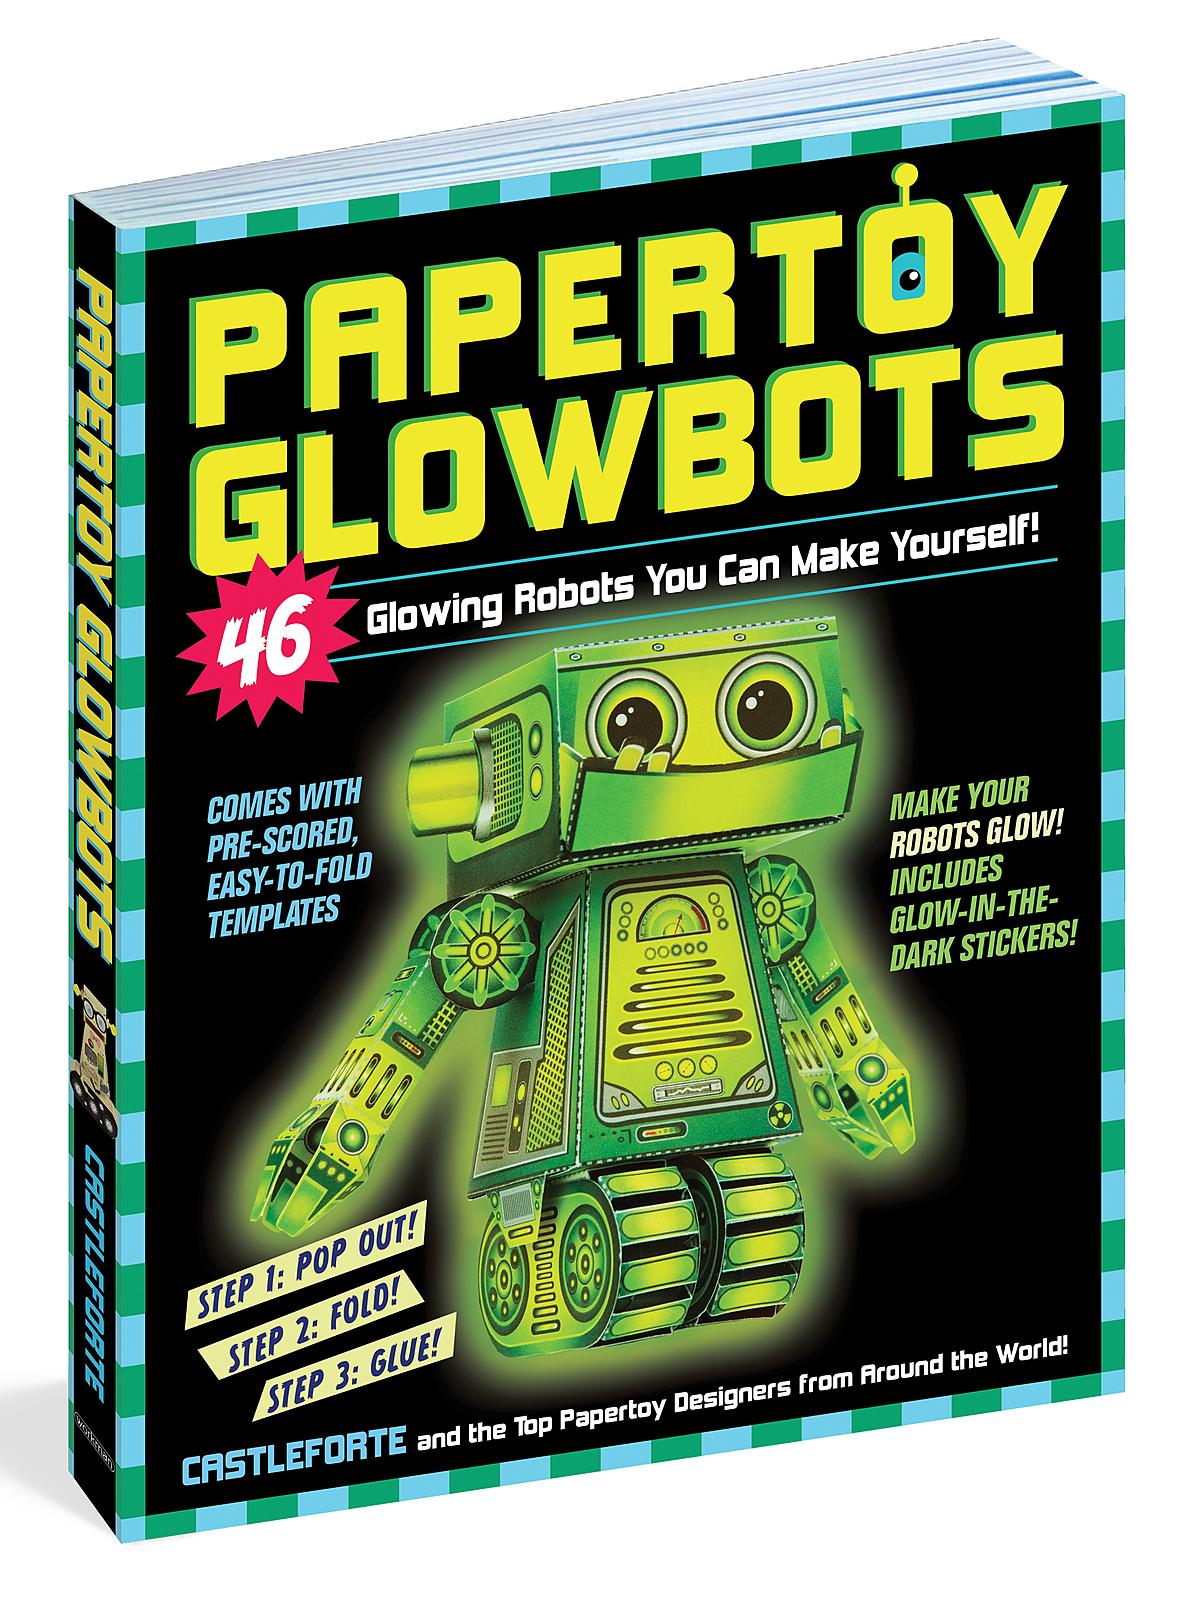 Papertoy Glowbots Each